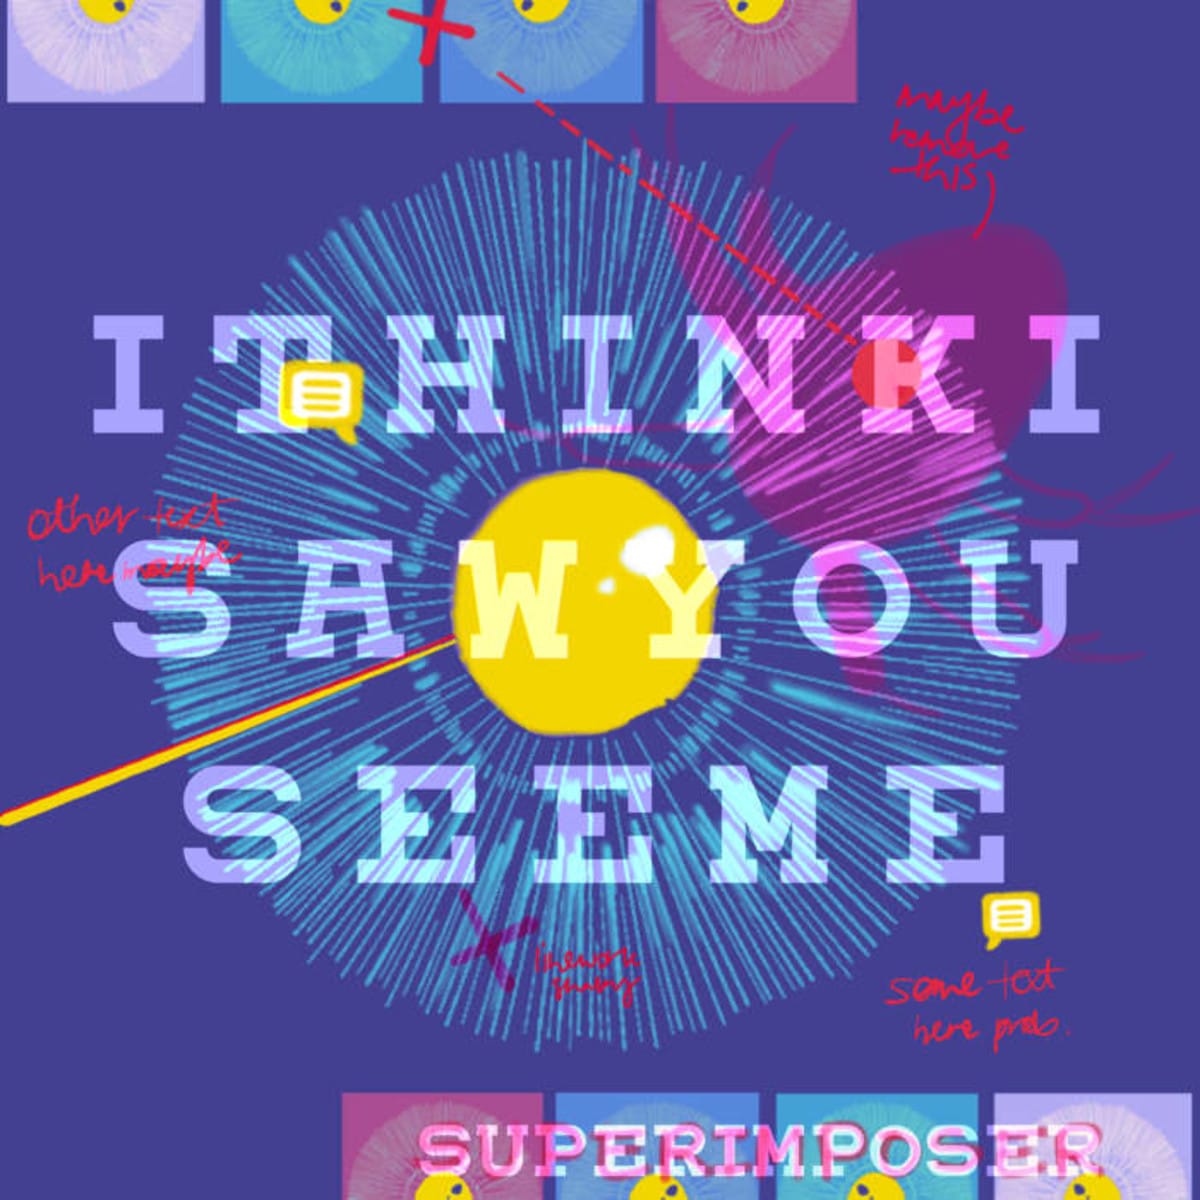 I Think I Saw You See Me: Superimposer